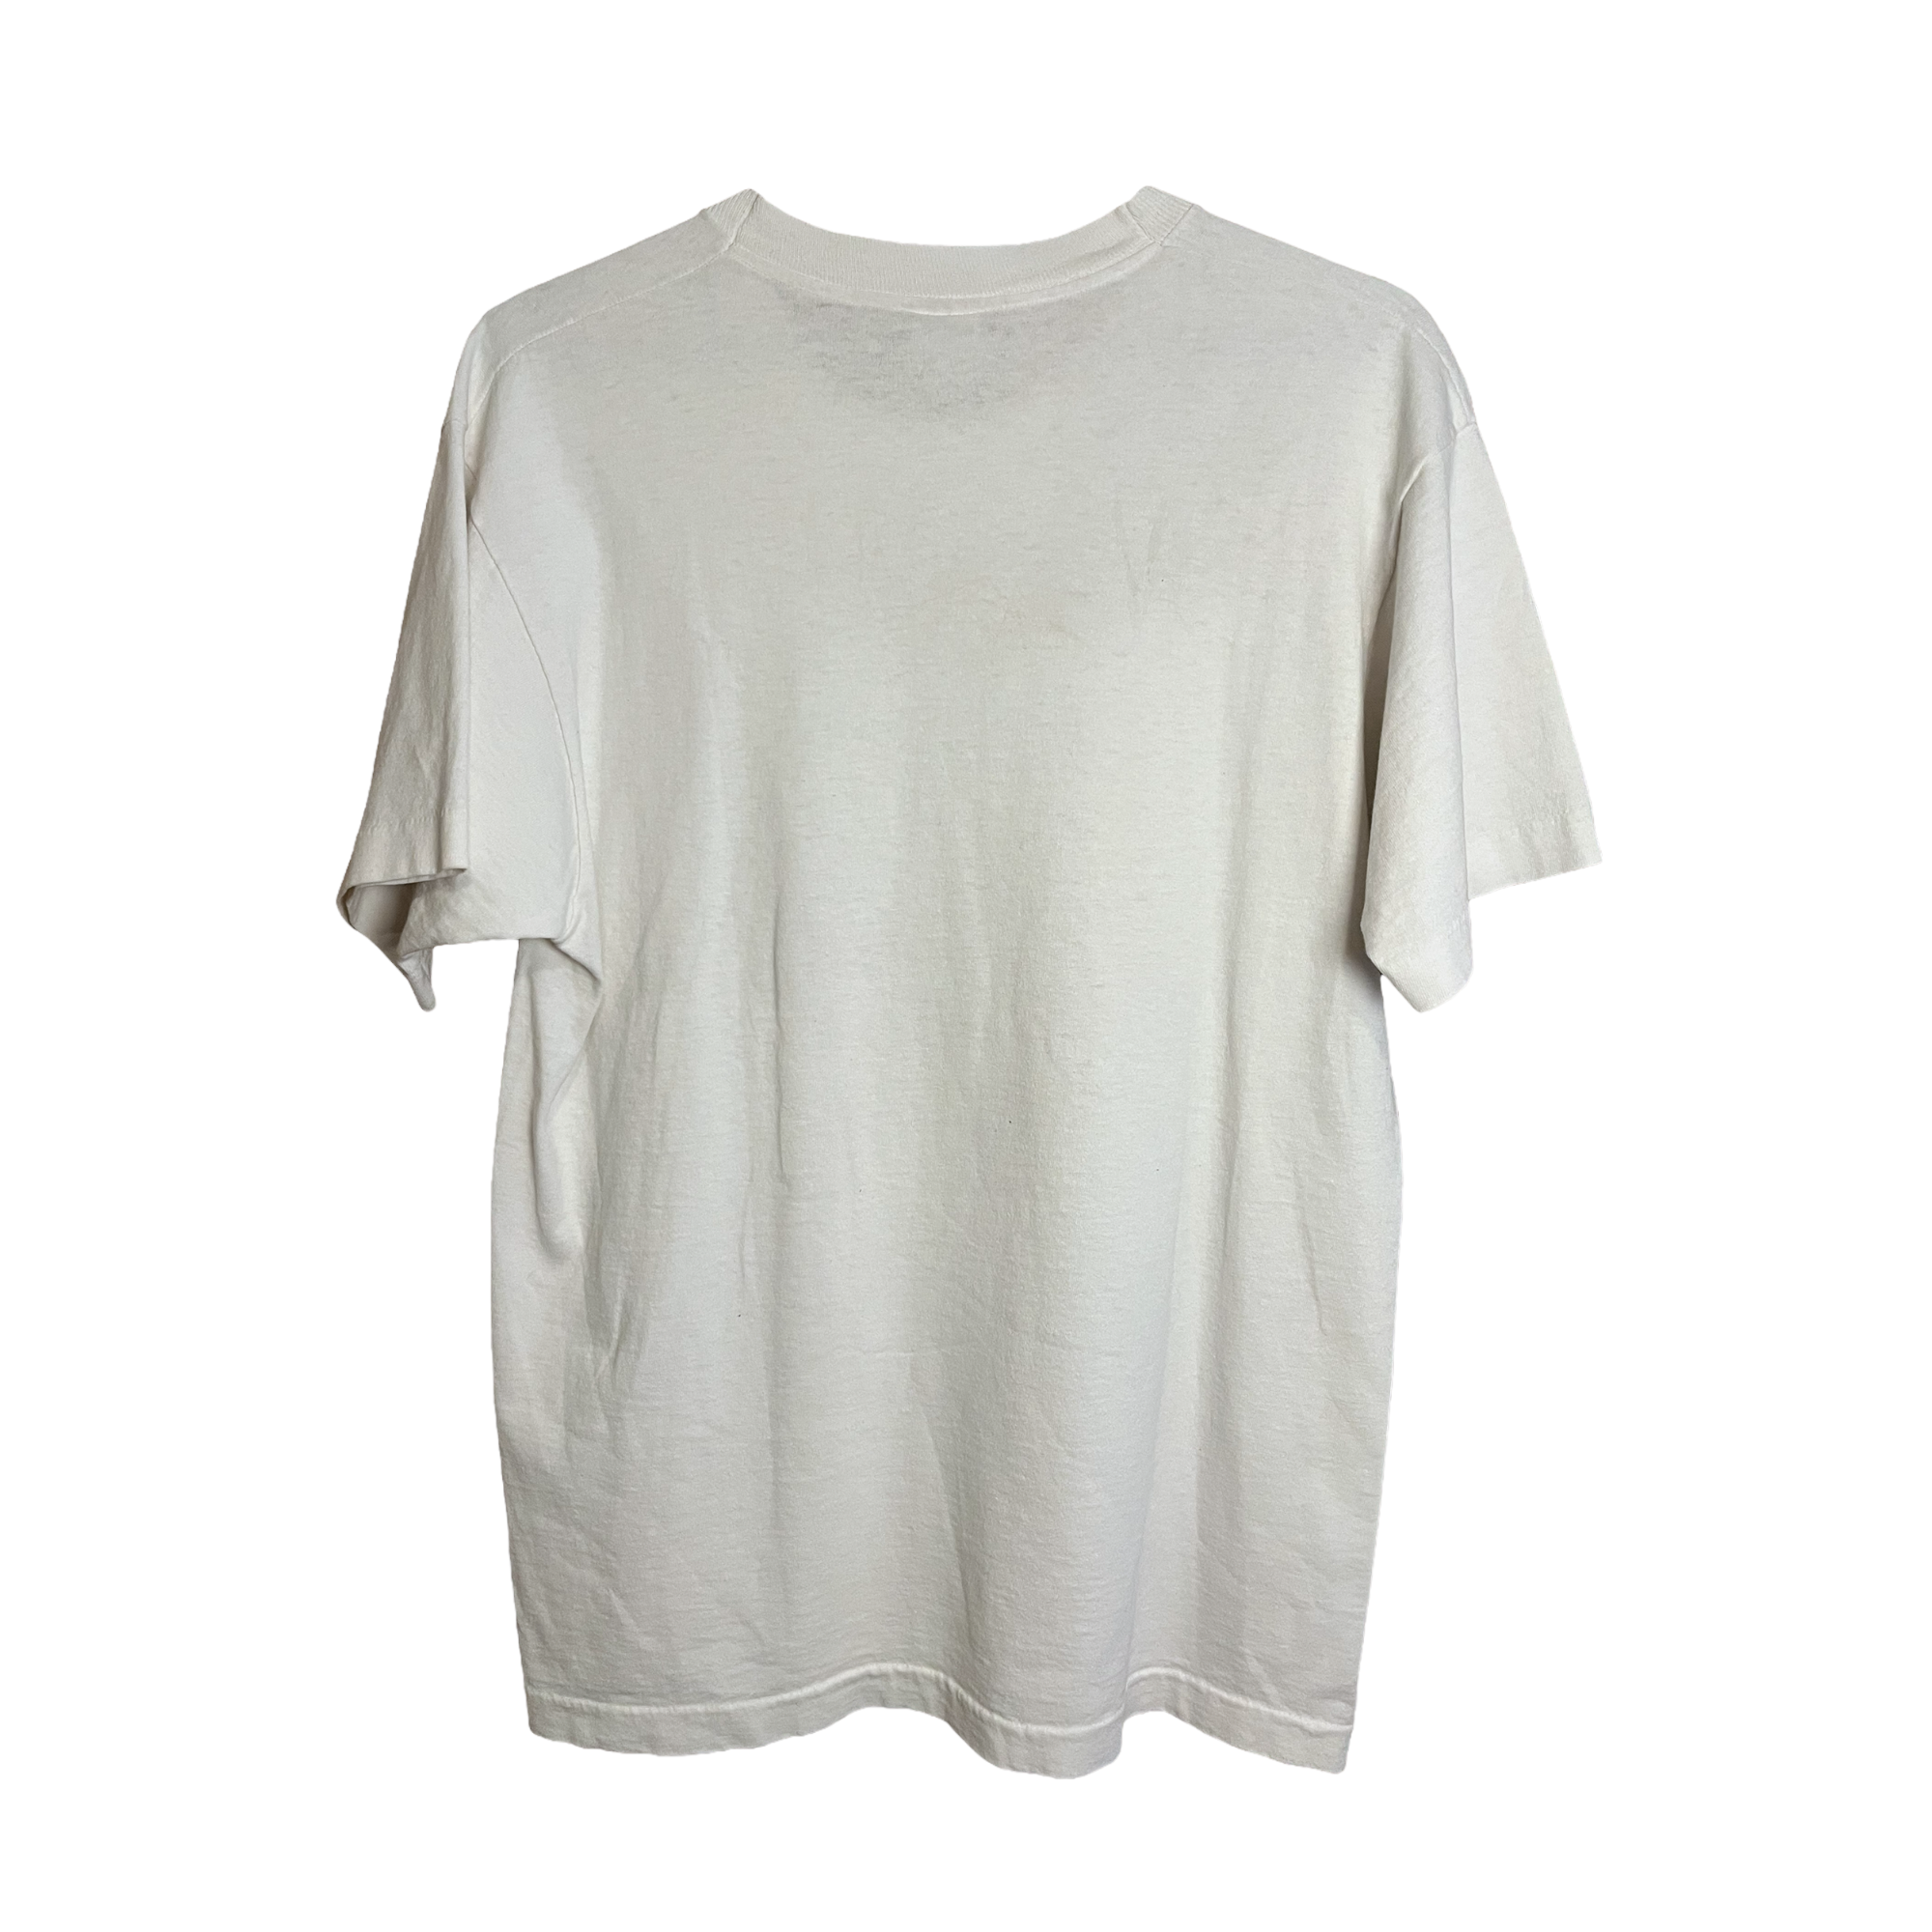 1988 Anti-Fur T-Shirt - White/Off-White - L